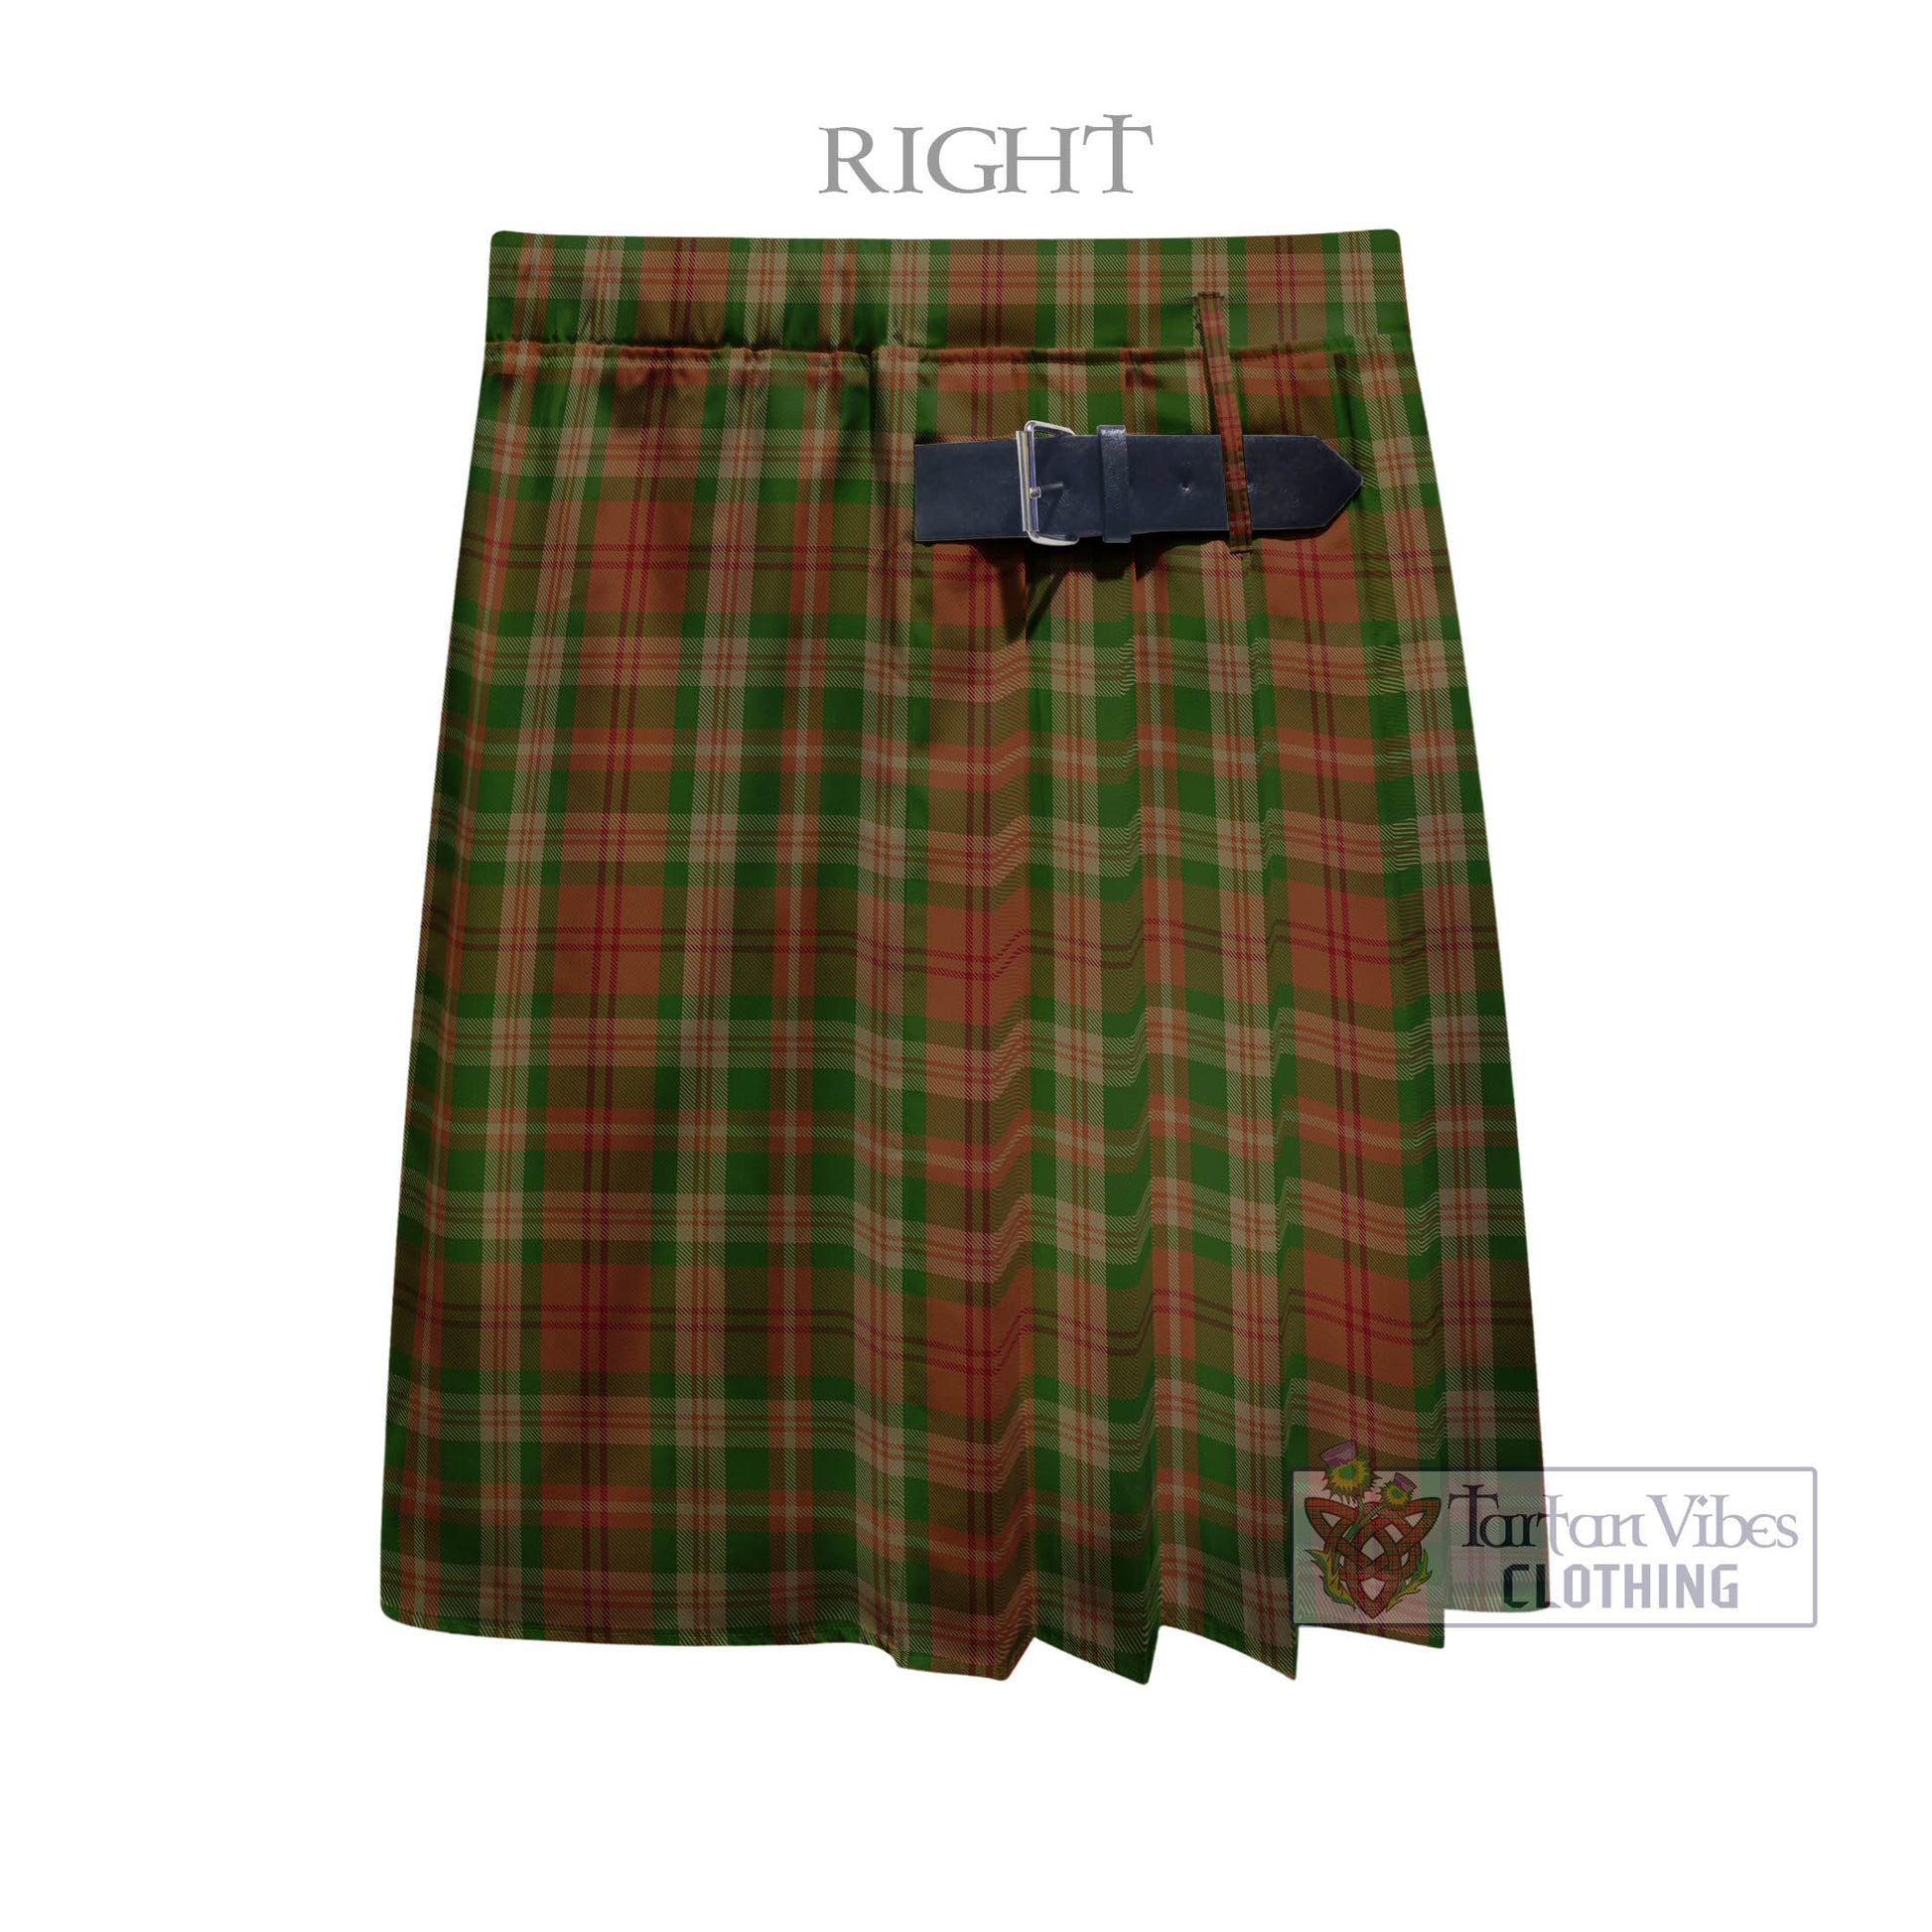 Tartan Vibes Clothing Pierce Tartan Men's Pleated Skirt - Fashion Casual Retro Scottish Style